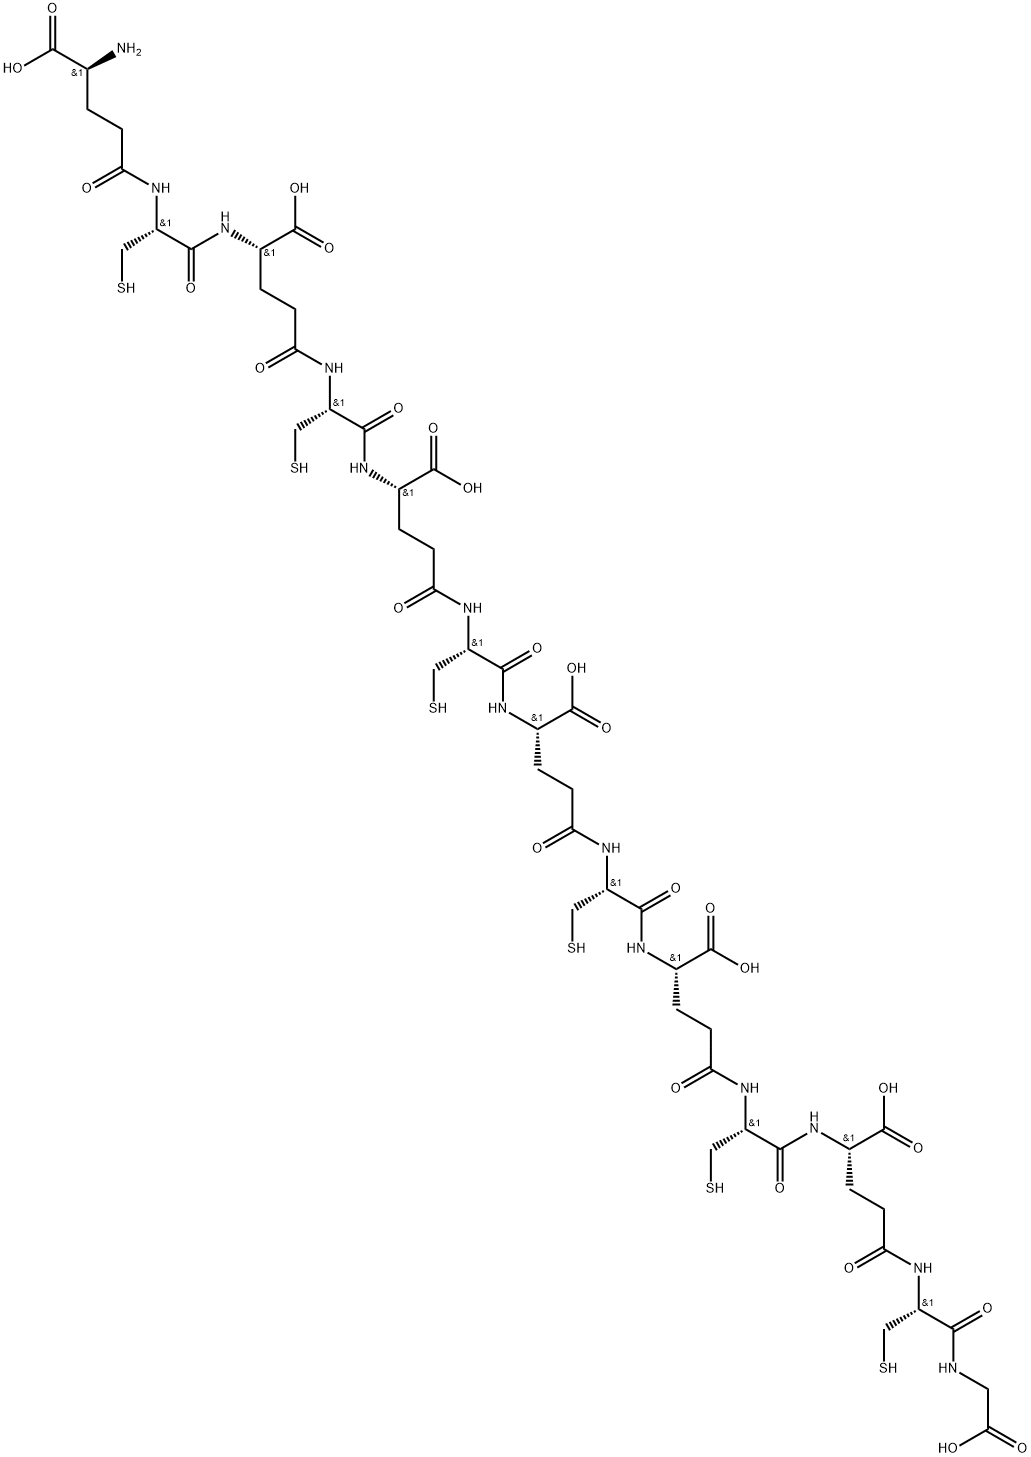 Glycine, L-γ-glutamyl-L-cysteinyl-L-γ-glutamyl-L-cysteinyl-L-γ-glutamyl-L-cysteinyl-L-γ-glutamyl-L-cysteinyl-L-γ-glutamyl-L-cysteinyl-L-γ-glutamyl-L-cysteinyl-|金属结合化合物多肽PC 6